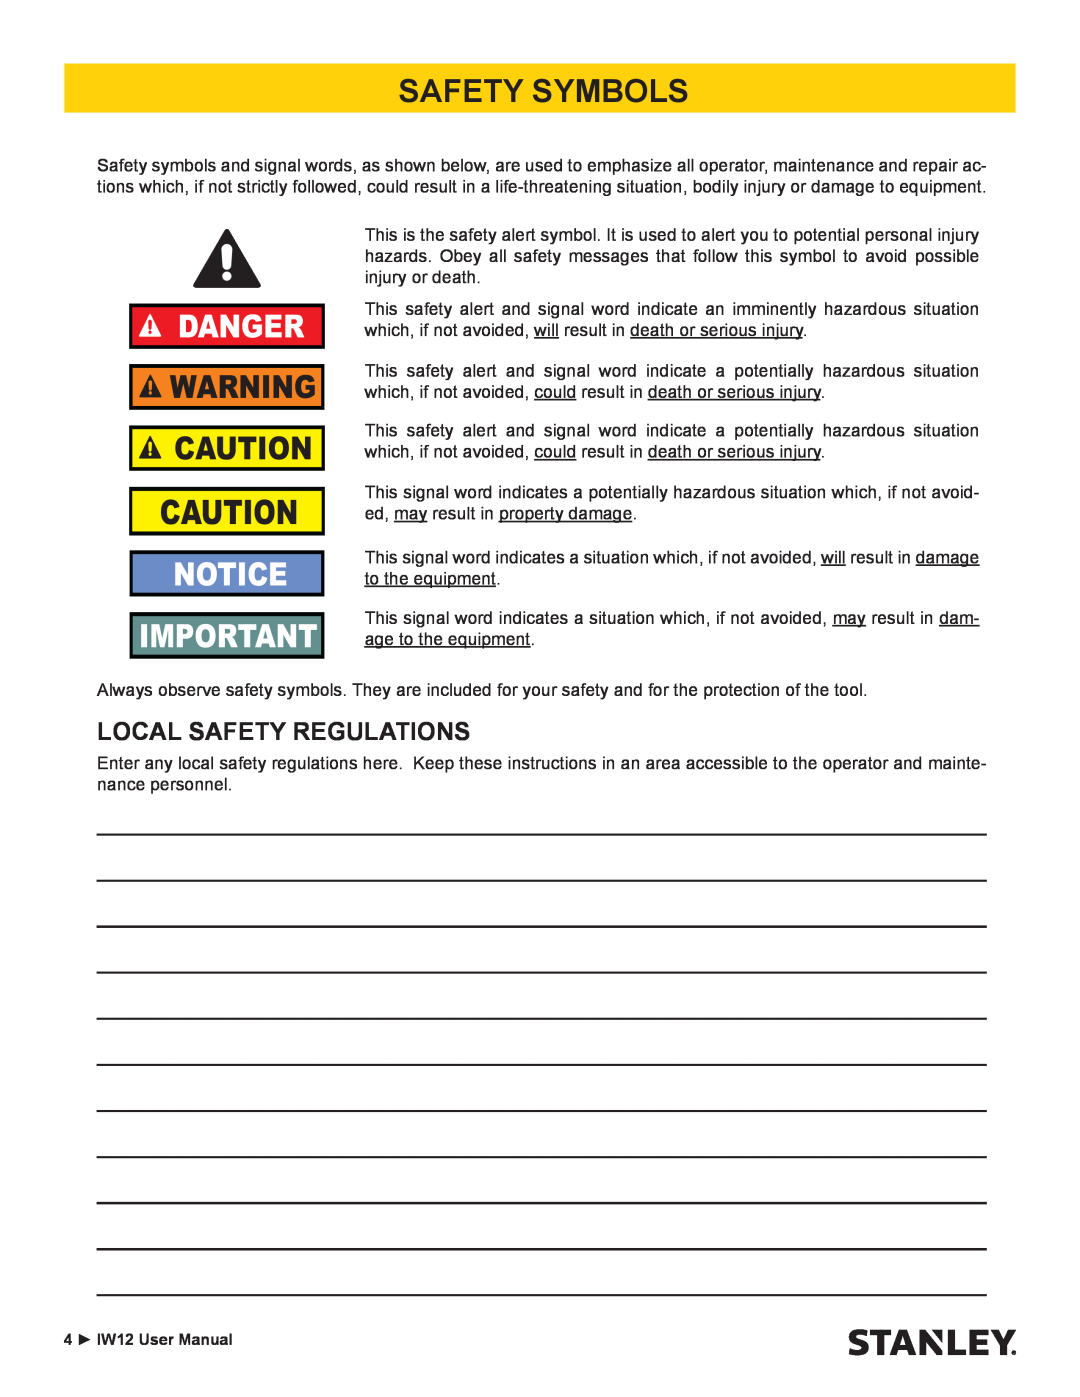 Stanley Black & Decker IW12 user manual Safety Symbols, Local Safety Regulations, Danger 